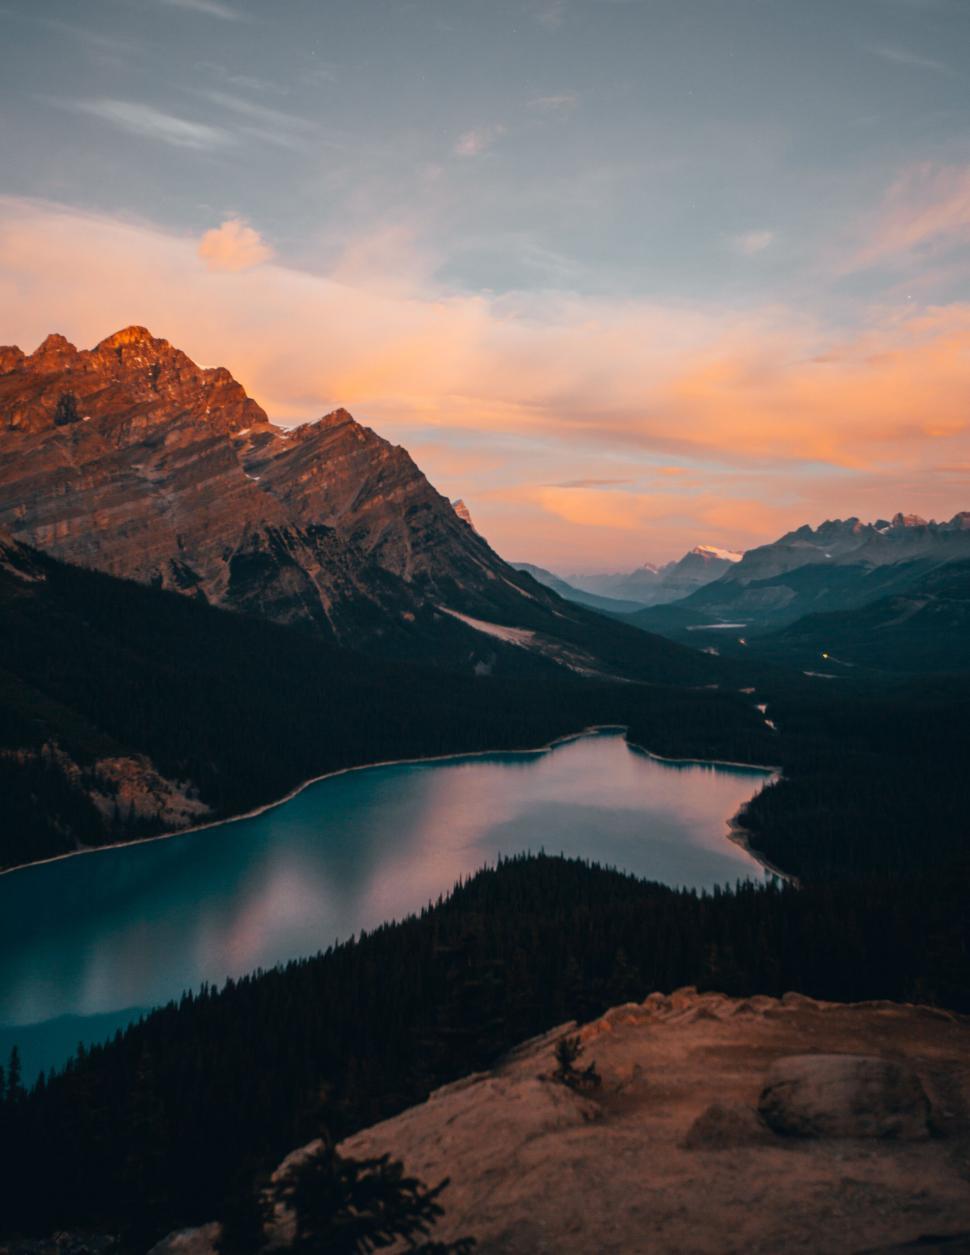 Free Image of Sunset illuminating a mountainous lake scenery 